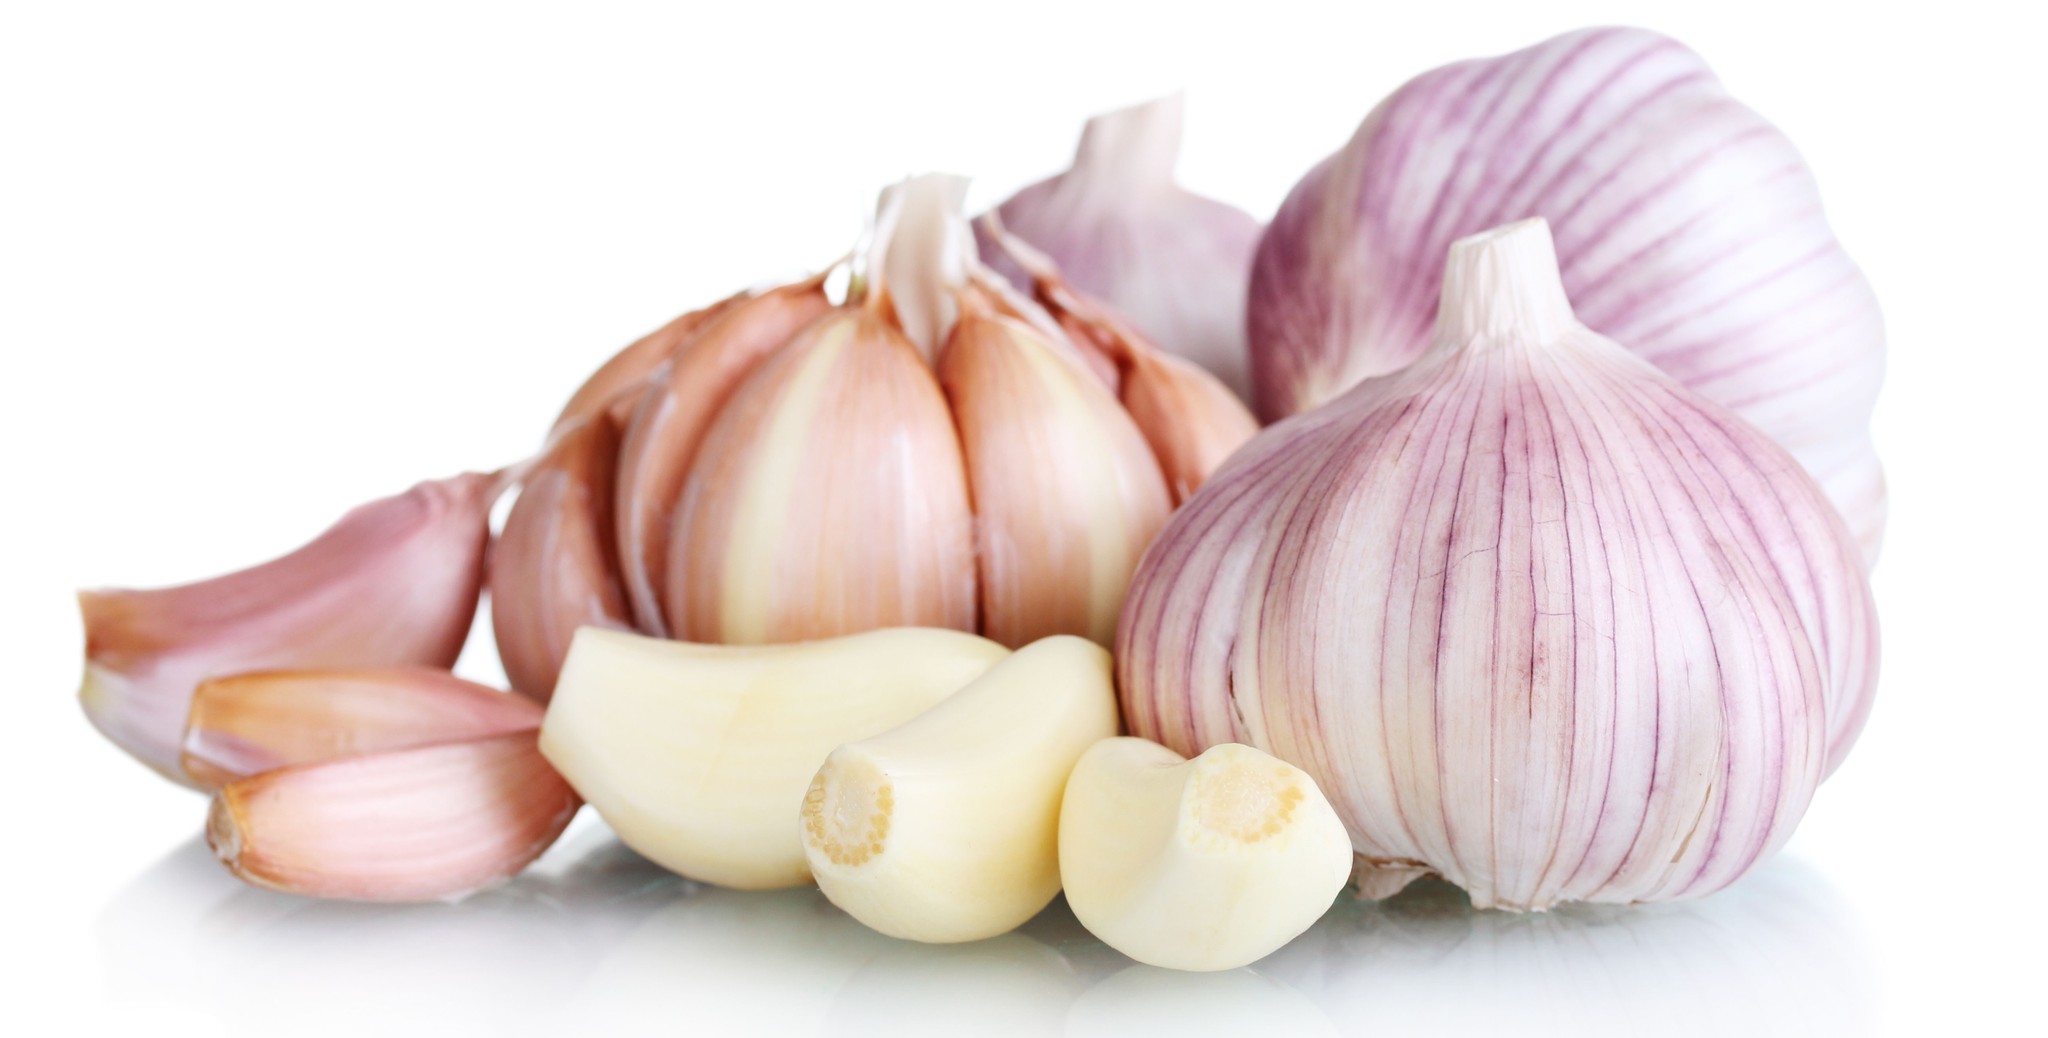 close up on 4 garlic bulbs, 3 unpeeled garlic cloves and 3 peeled garlic cloves.